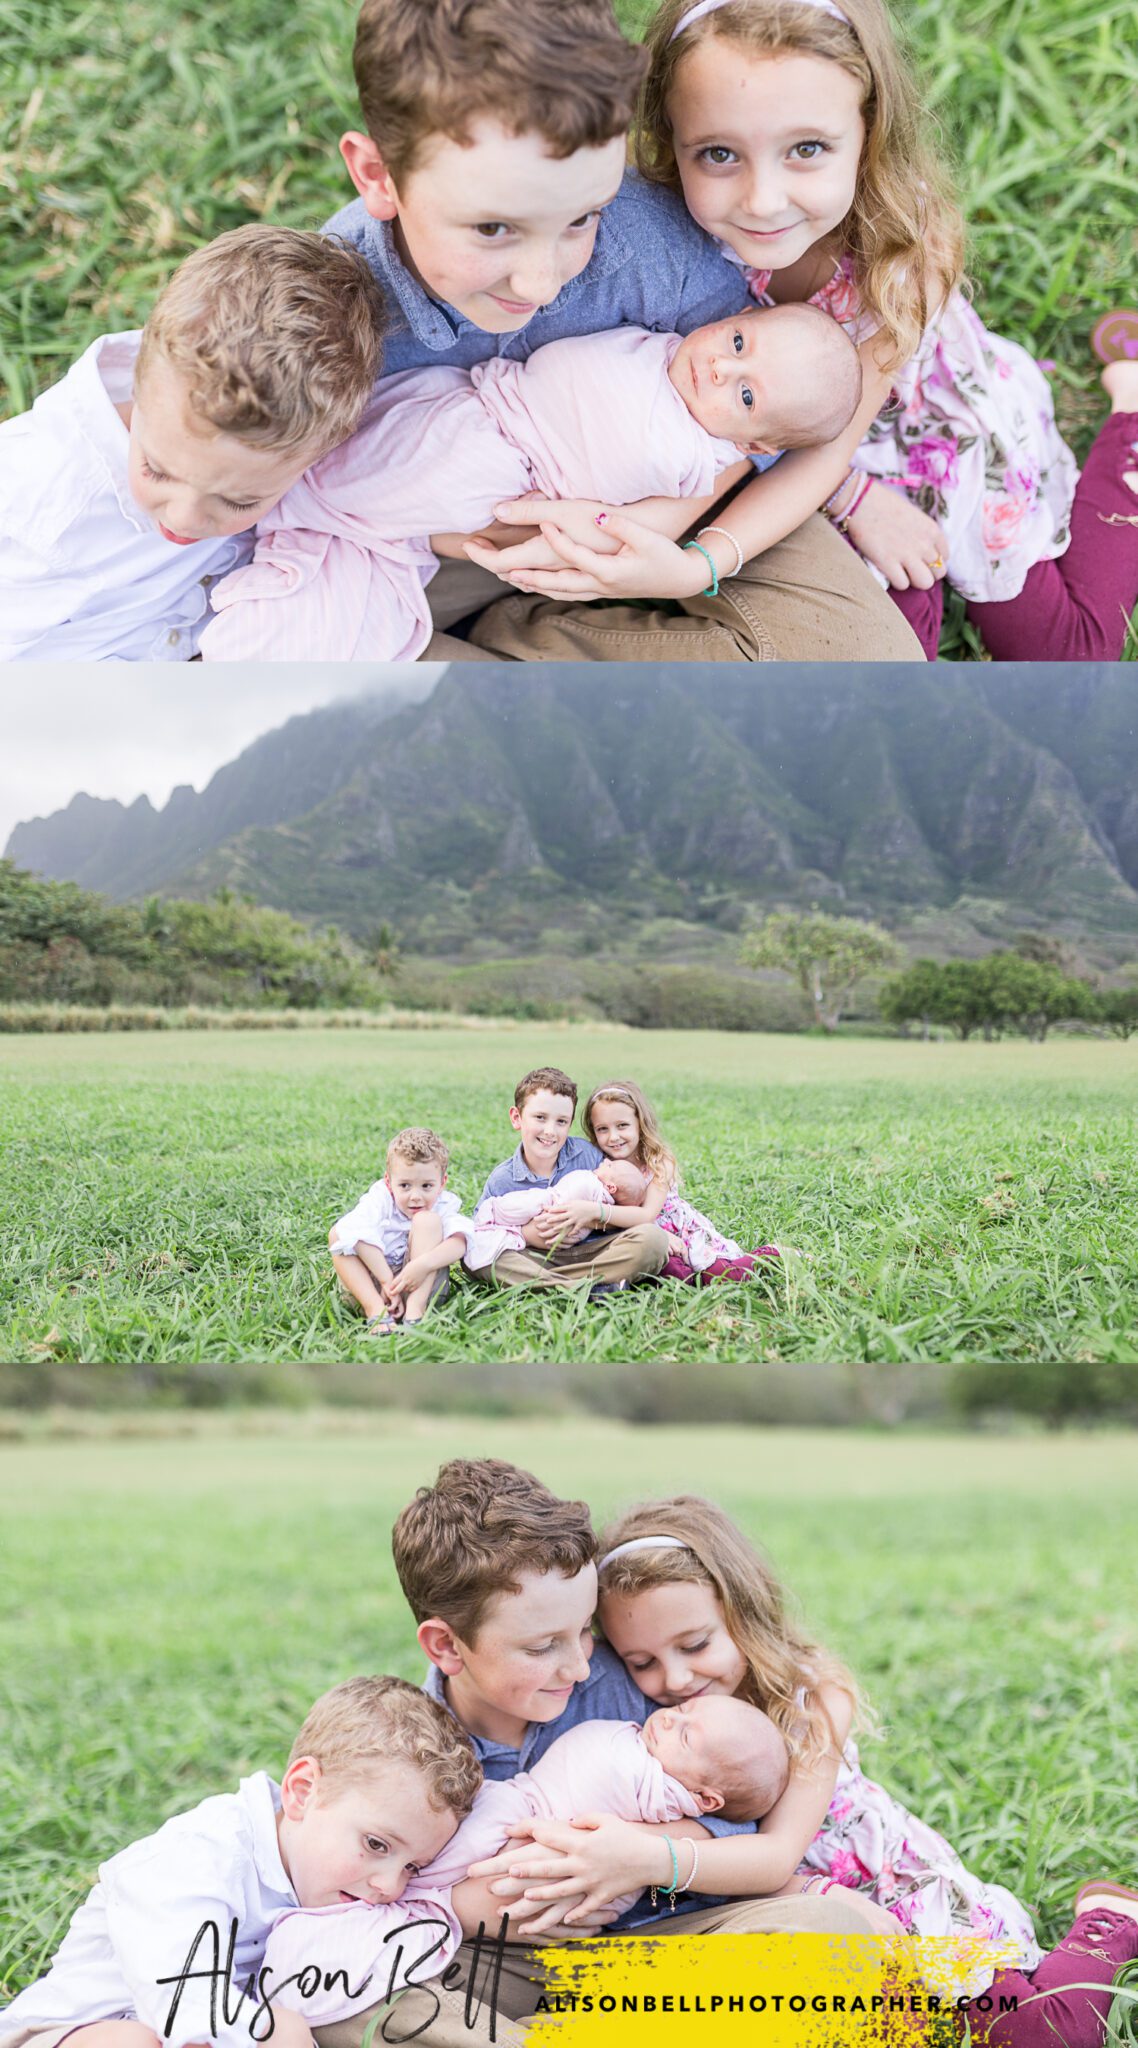 Kualoa Regional Park Oahu Hawaii family photos by Alison Bell, PHotographer